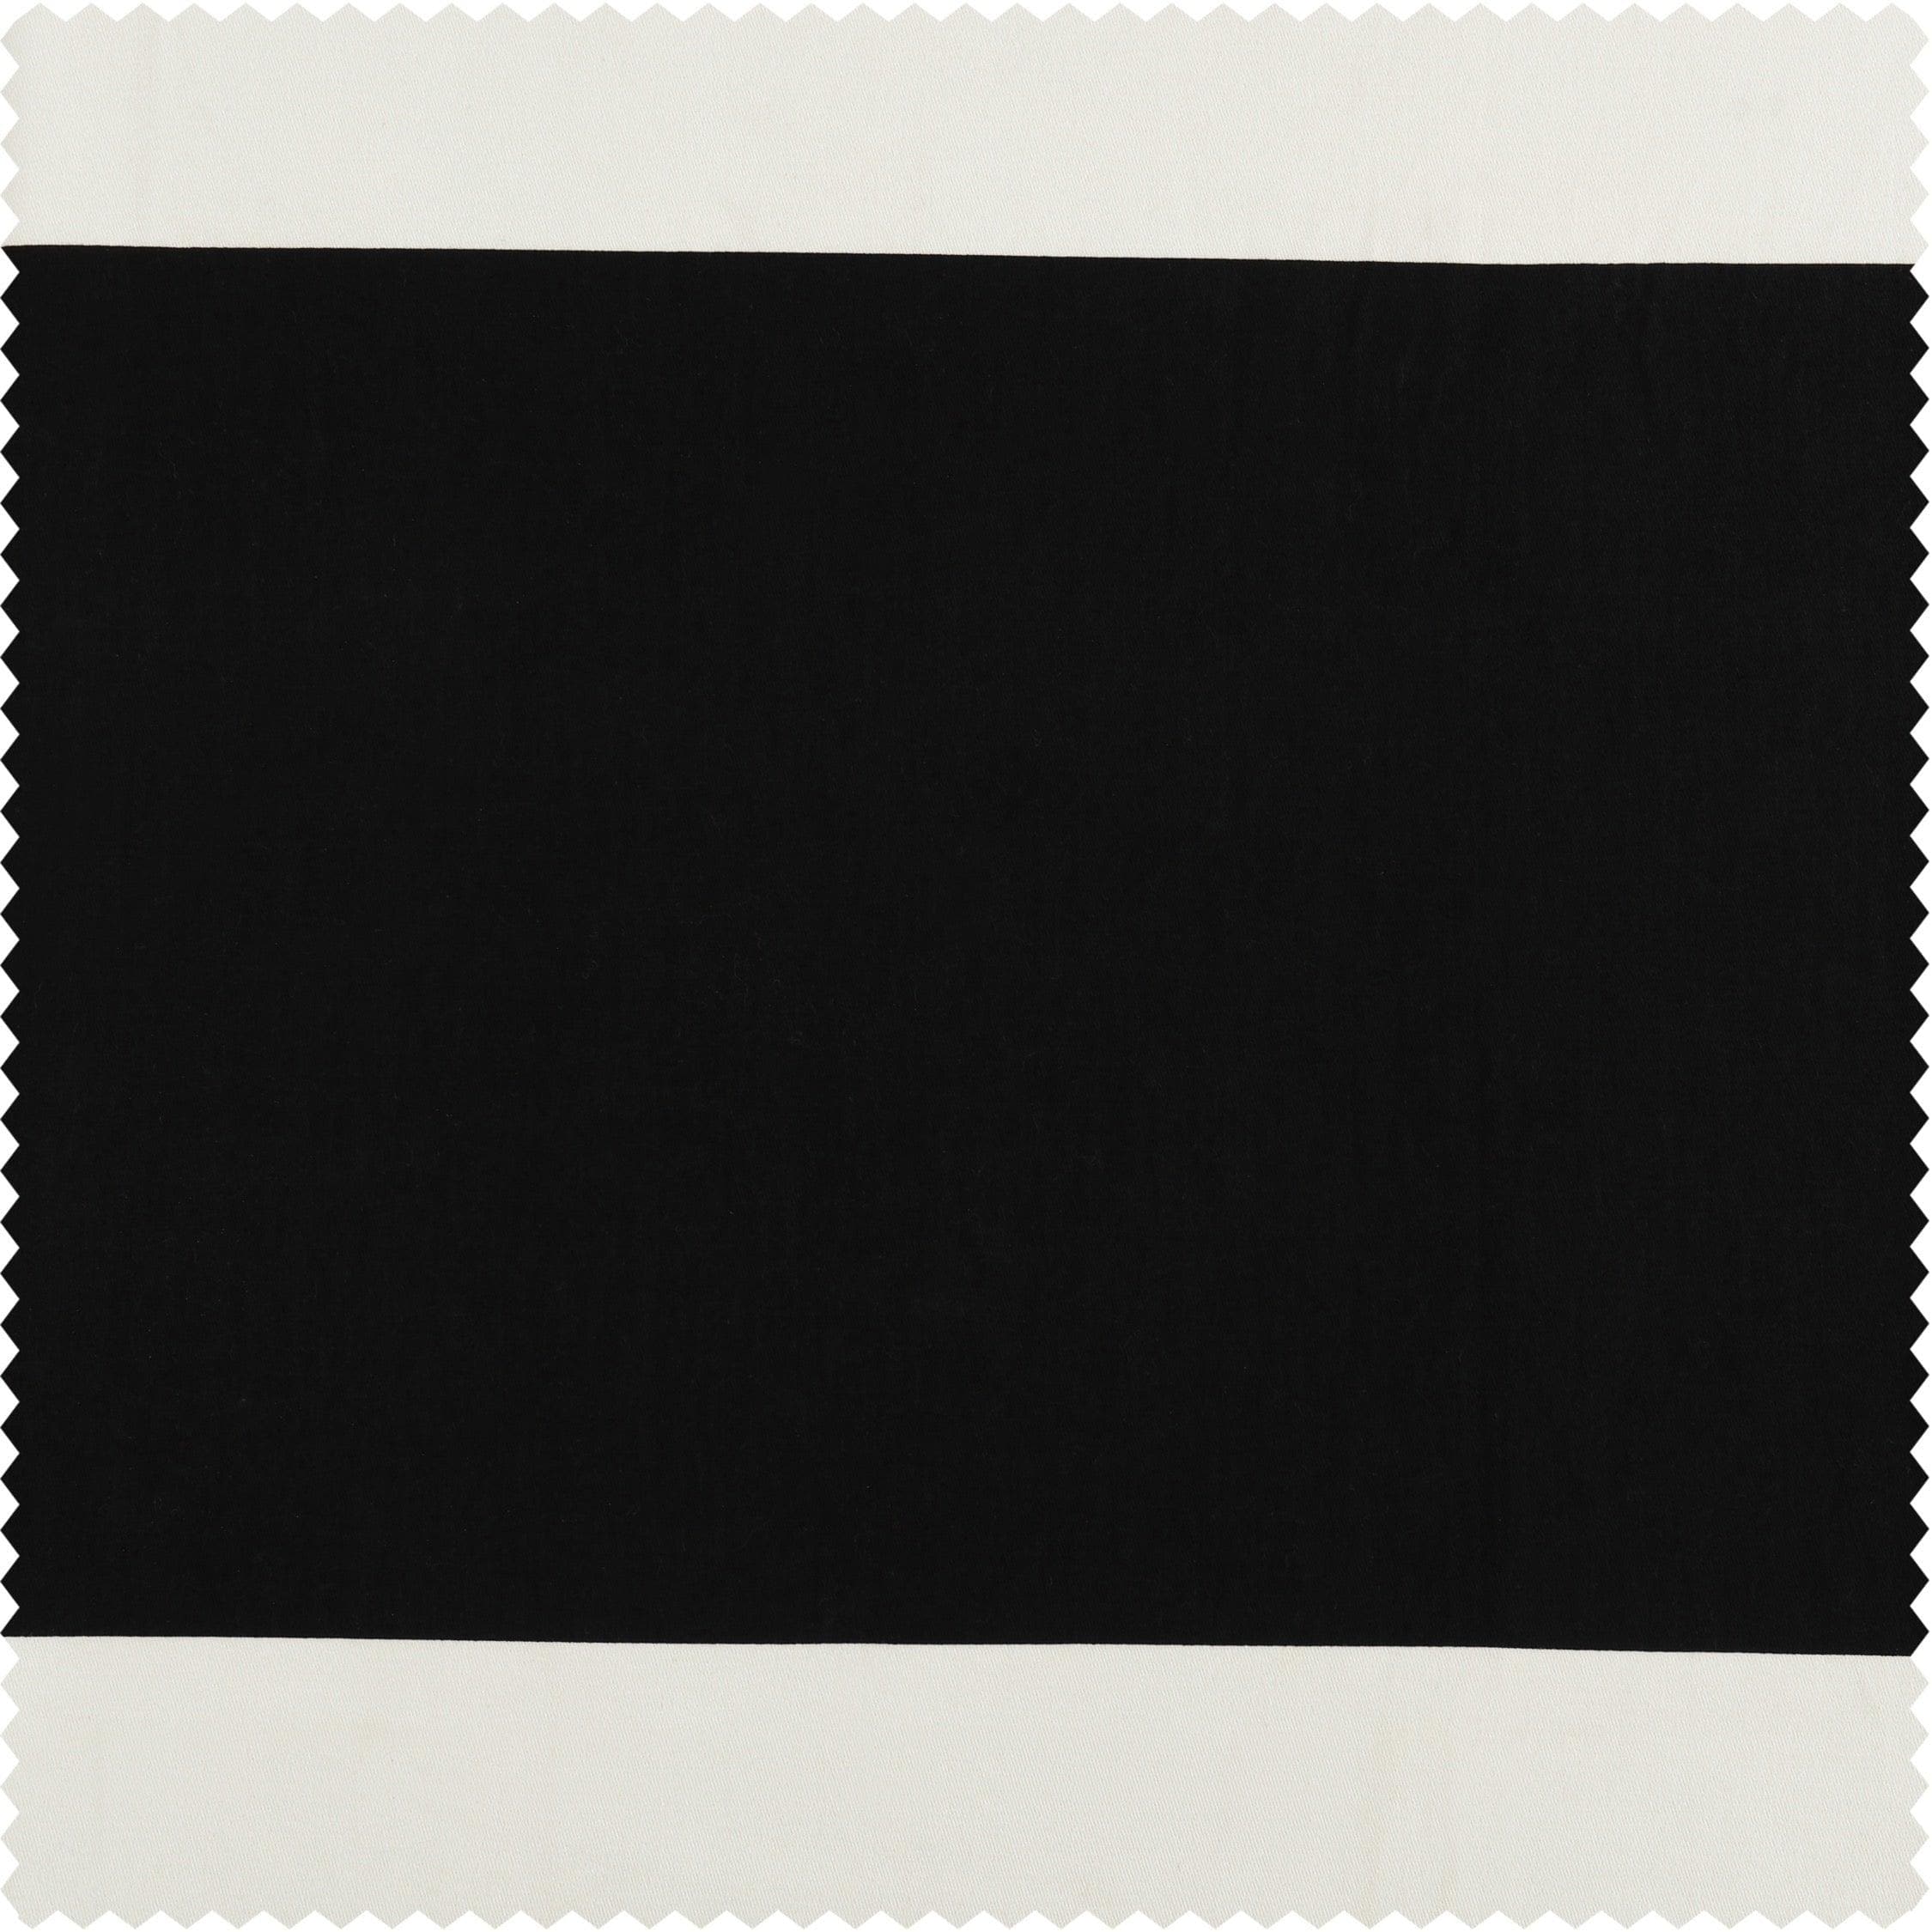 Onyx Black & Off White Horizontal Striped French Pleat Printed Cotton Curtain